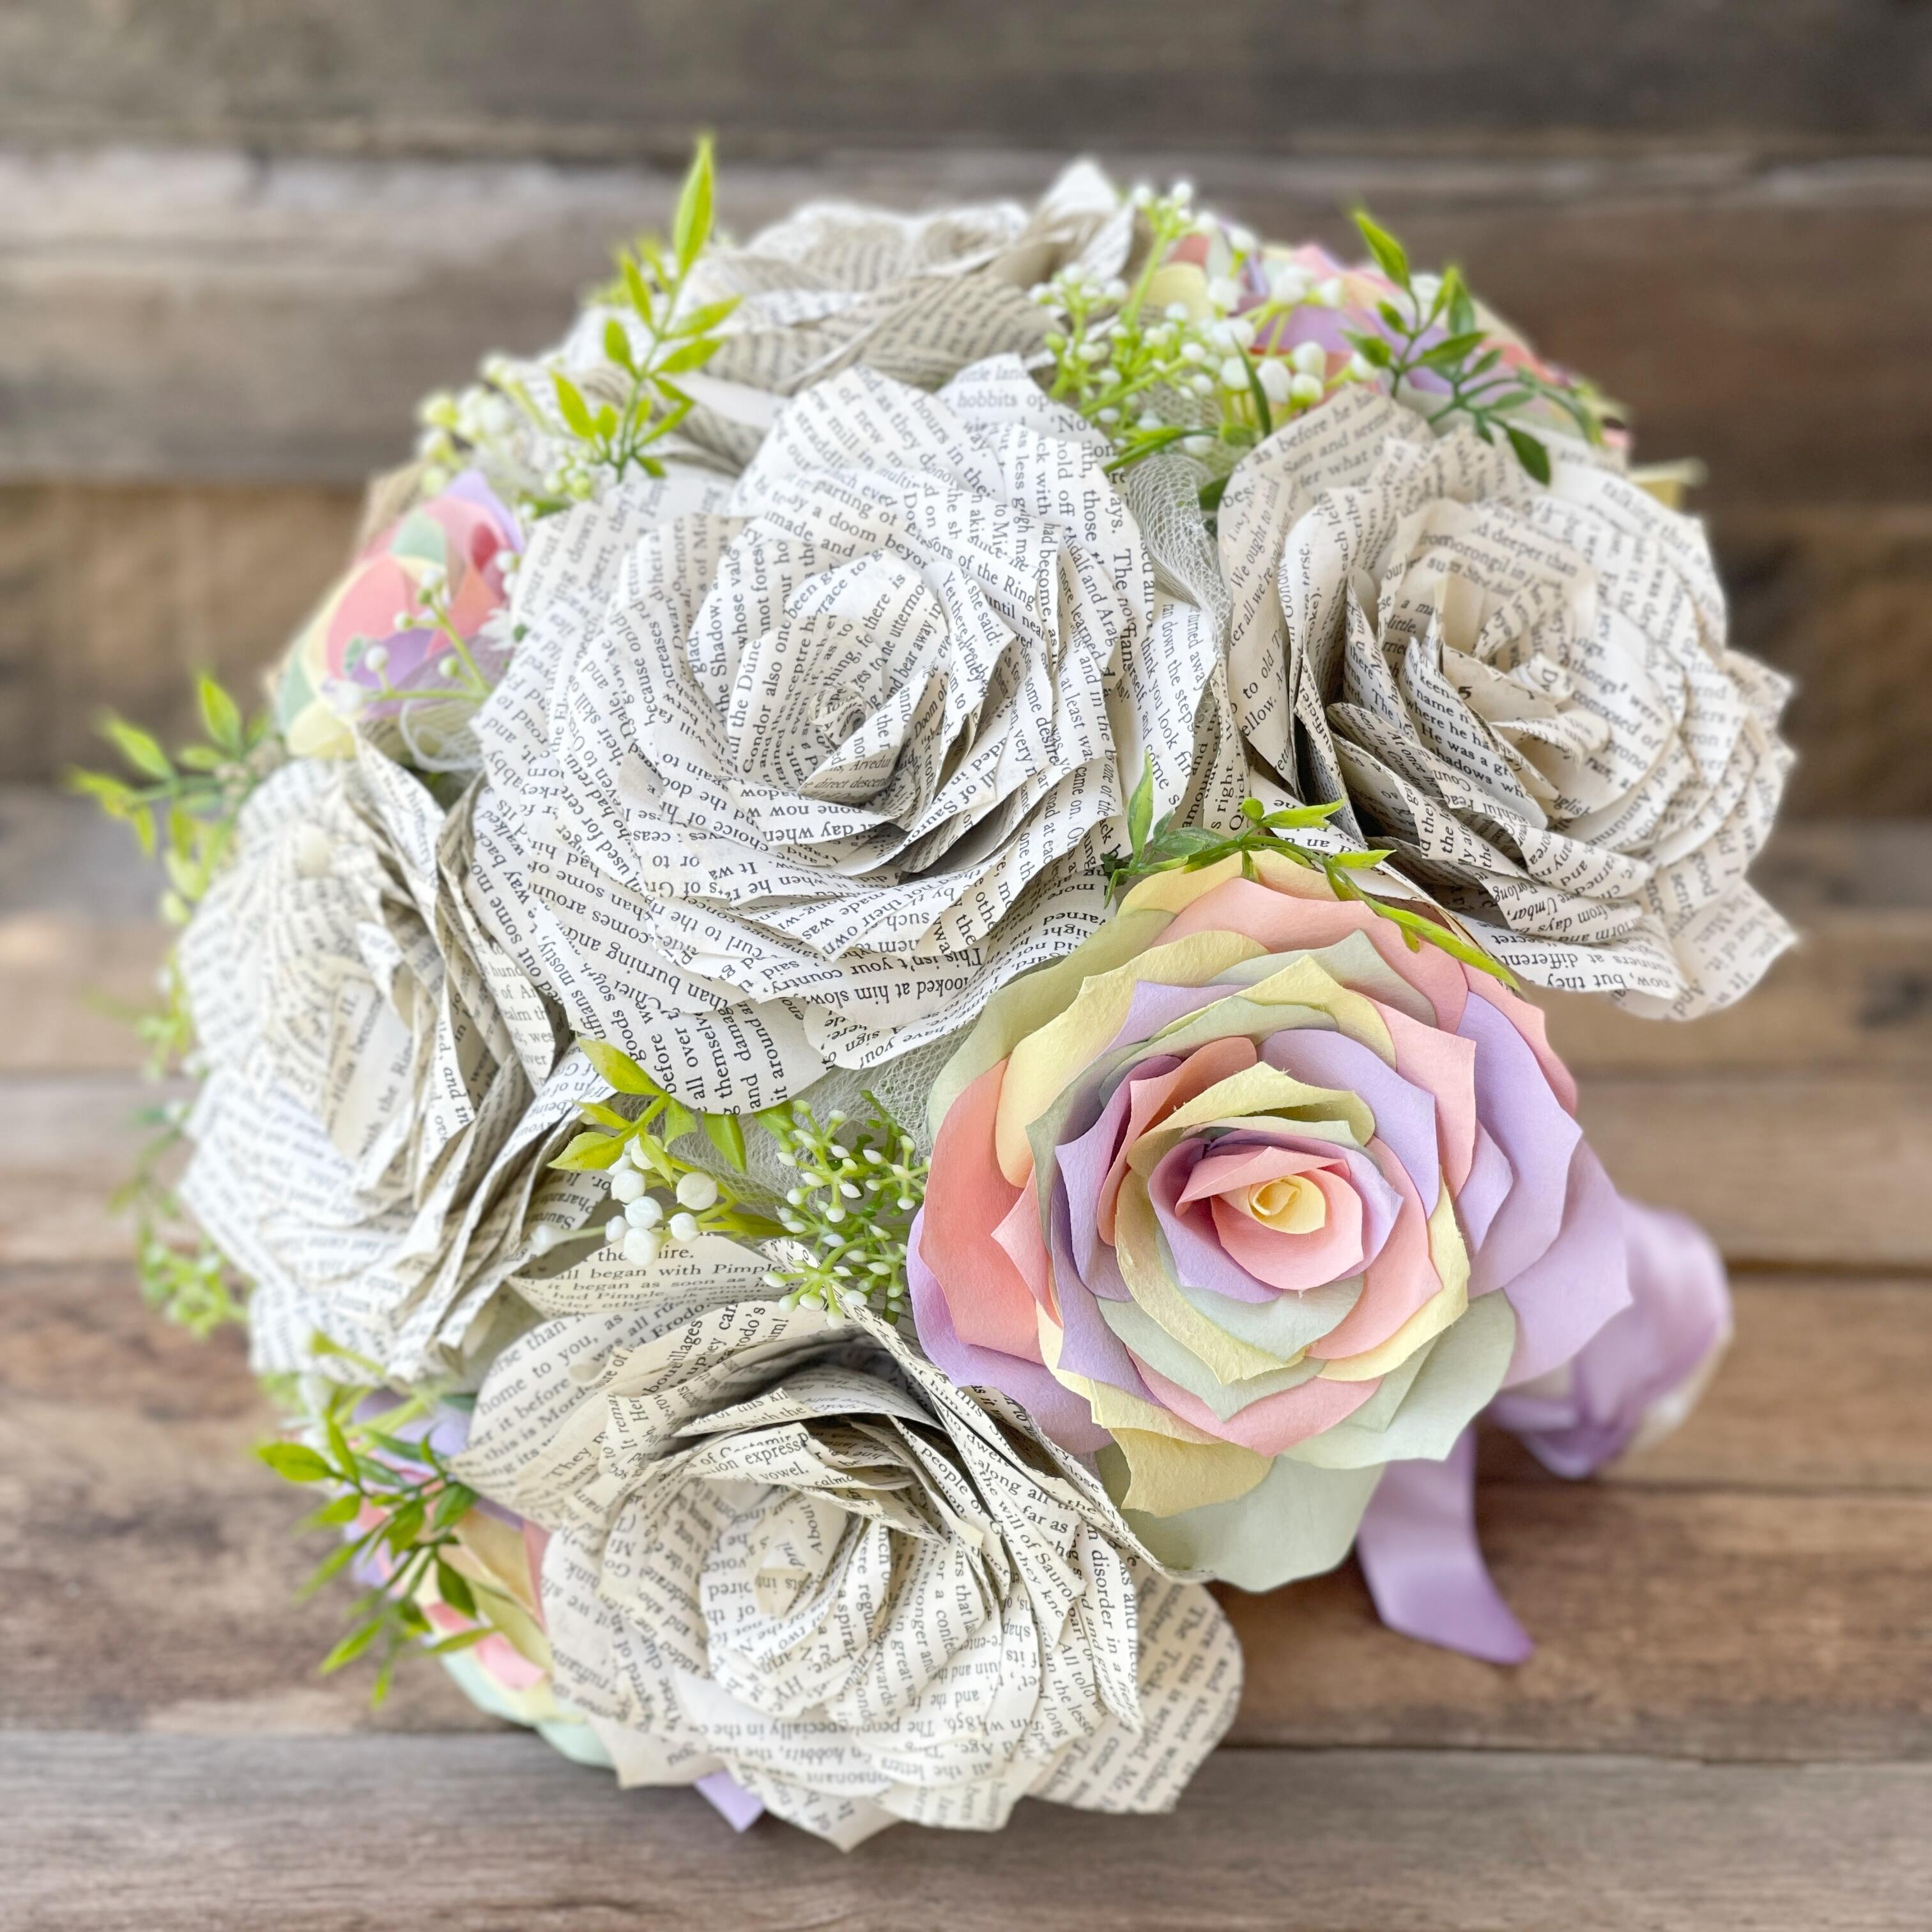 Rainbow Paper Flower Bouquet- Wedding bouquet, Made to order